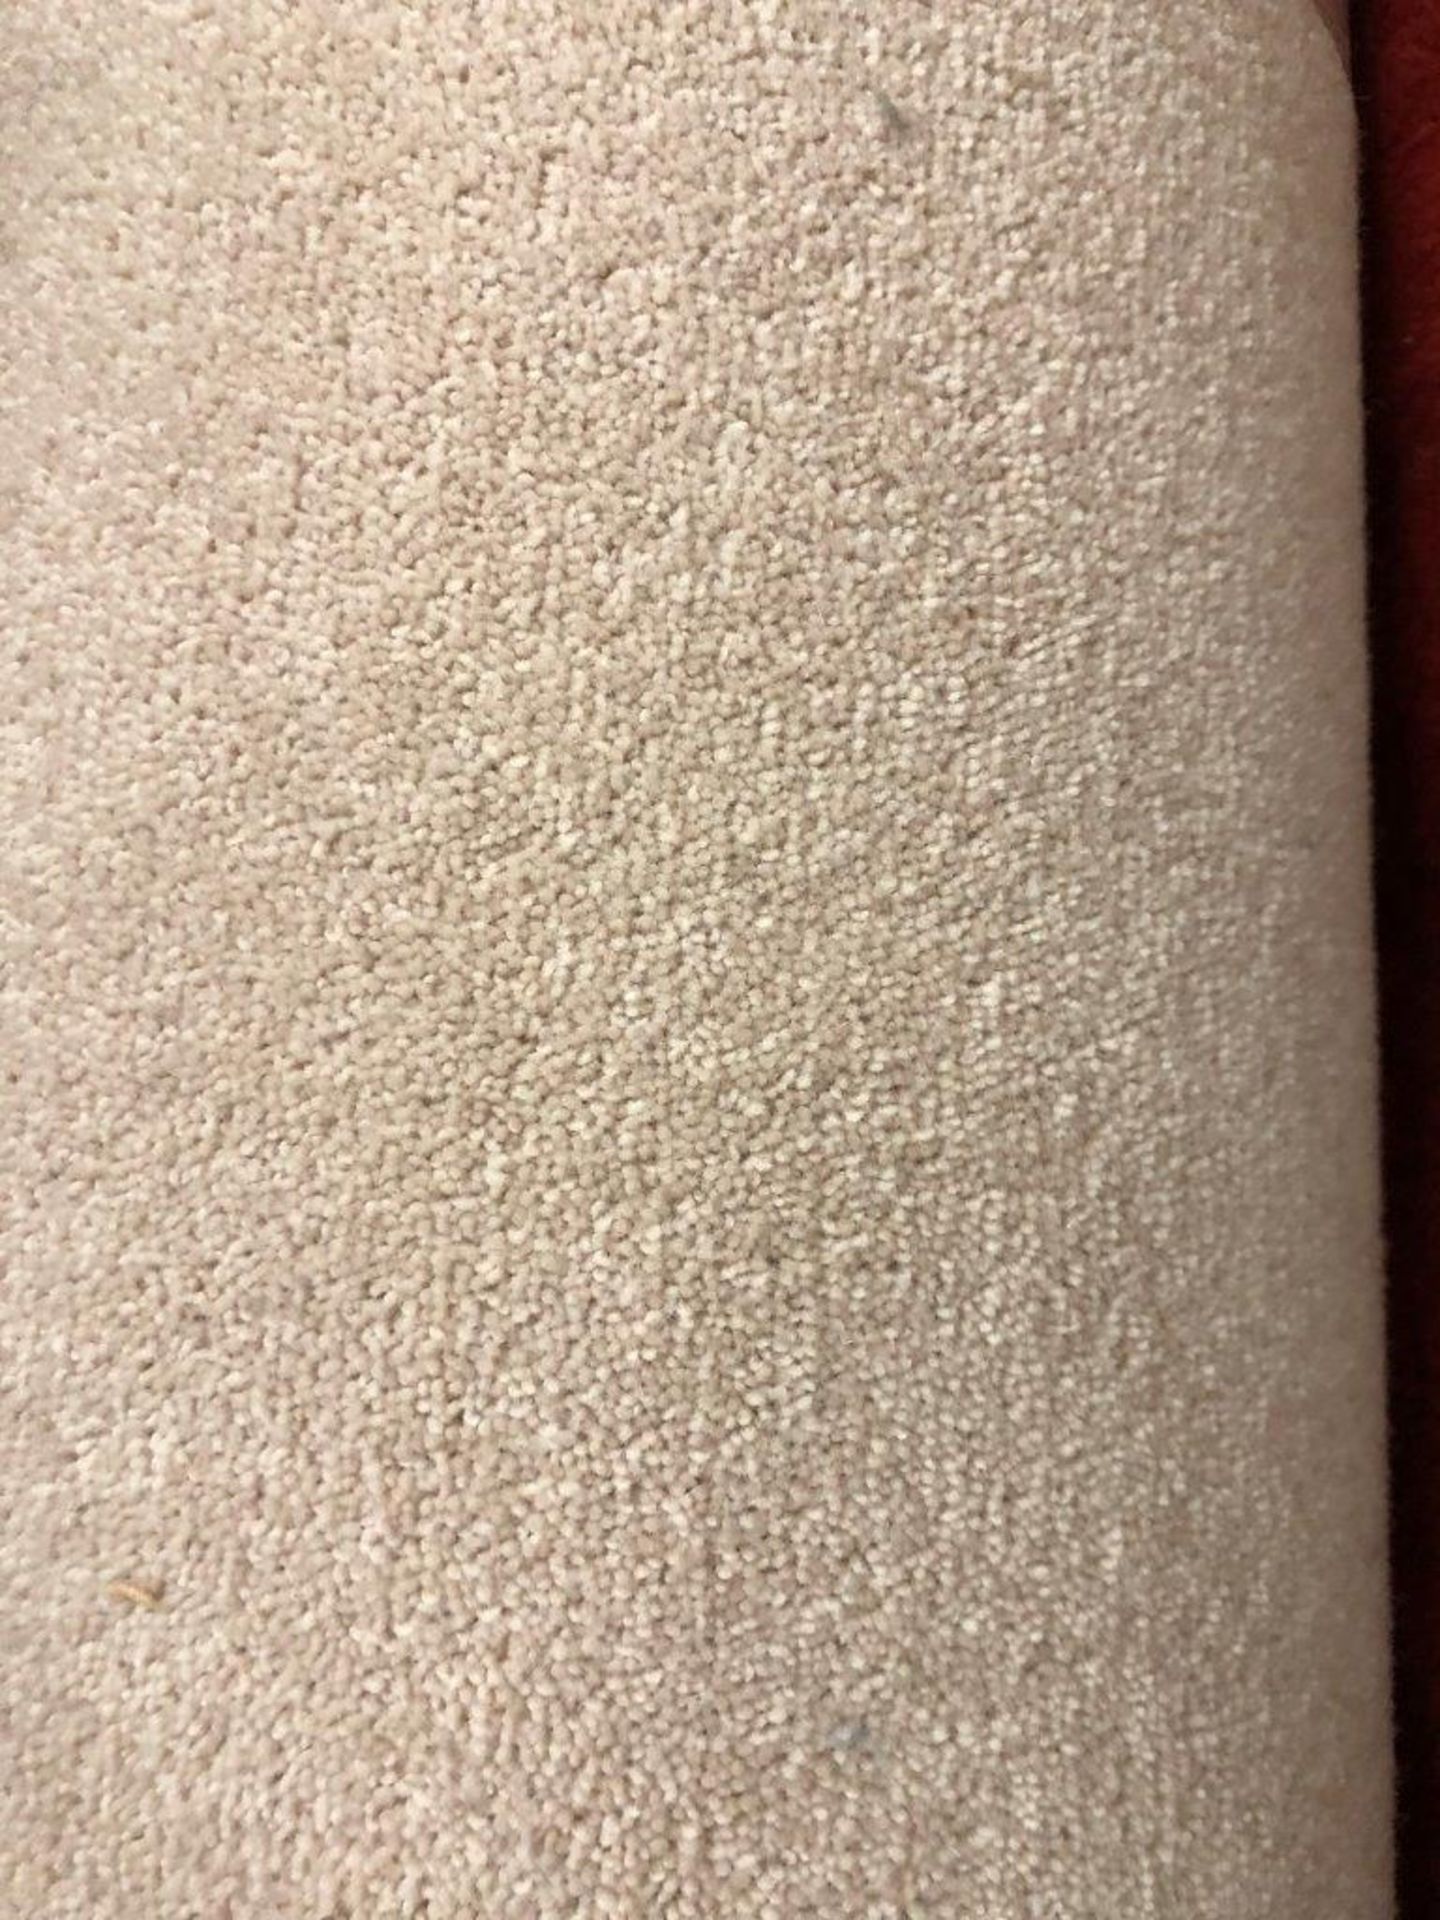 1 x Ryalux Carpet End Roll - Cream 2.7x5.0m2 - Image 3 of 3